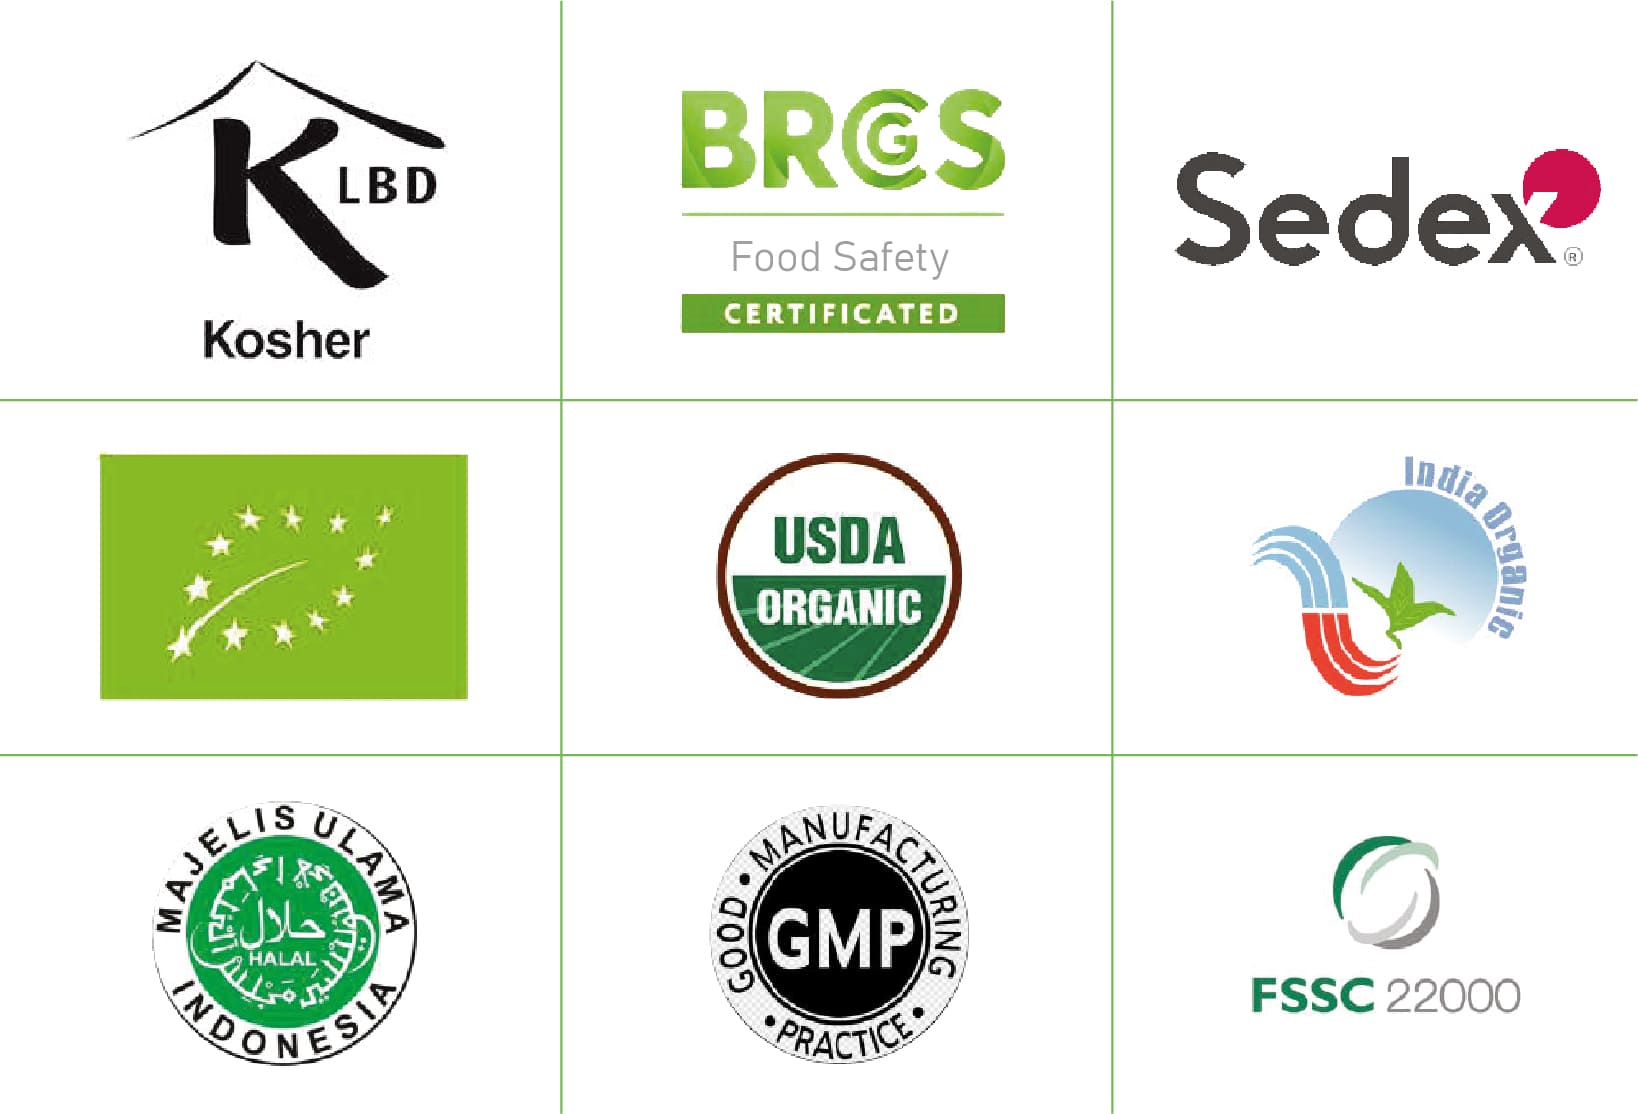 GMP, USDA Organic certifications